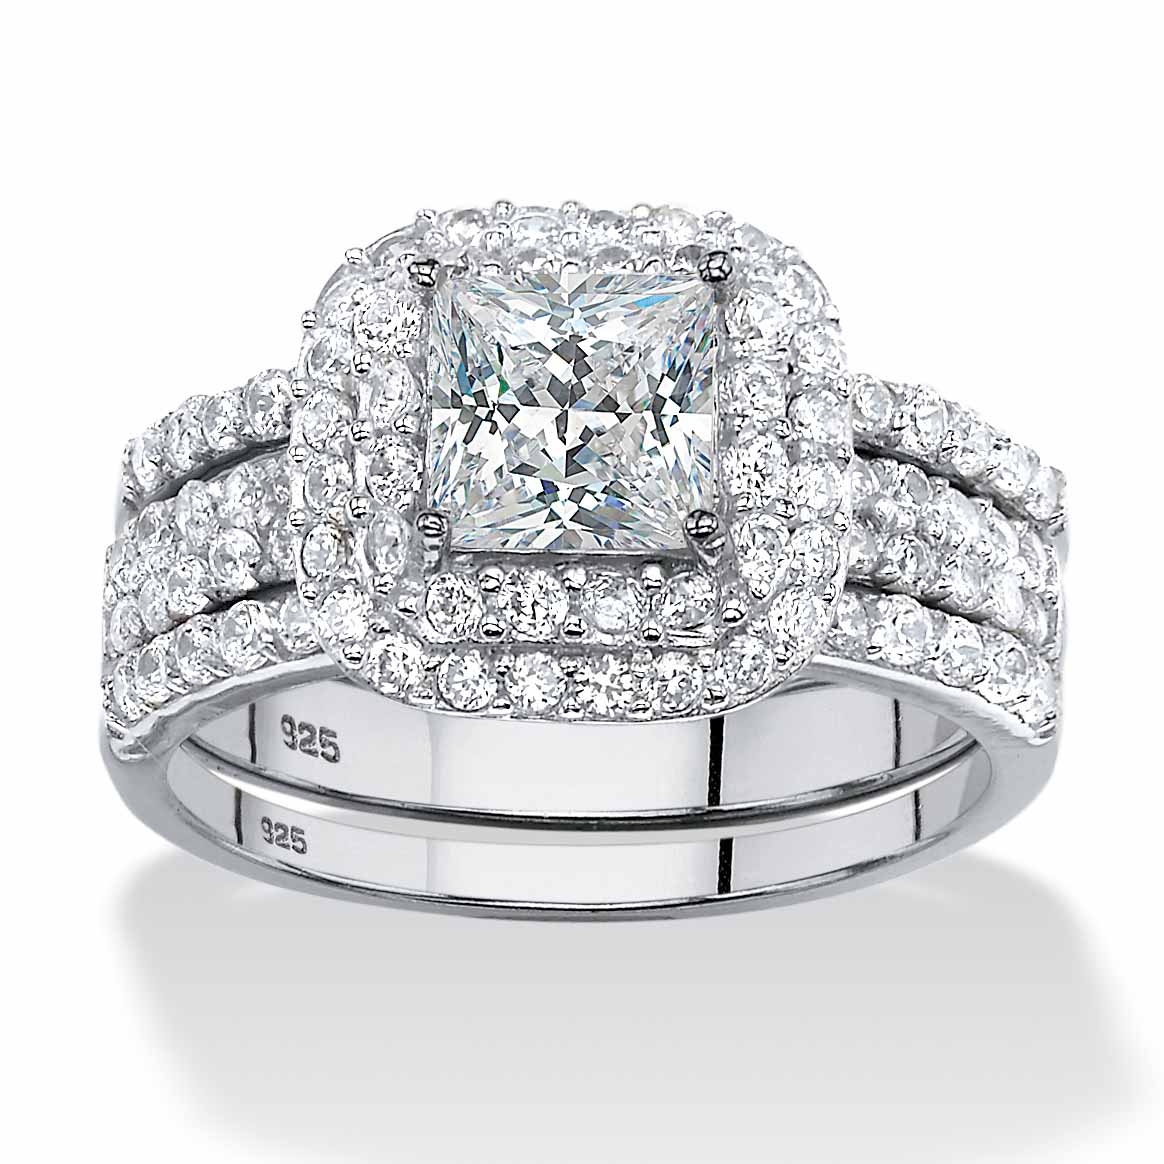 Sterling silver wedding ring set